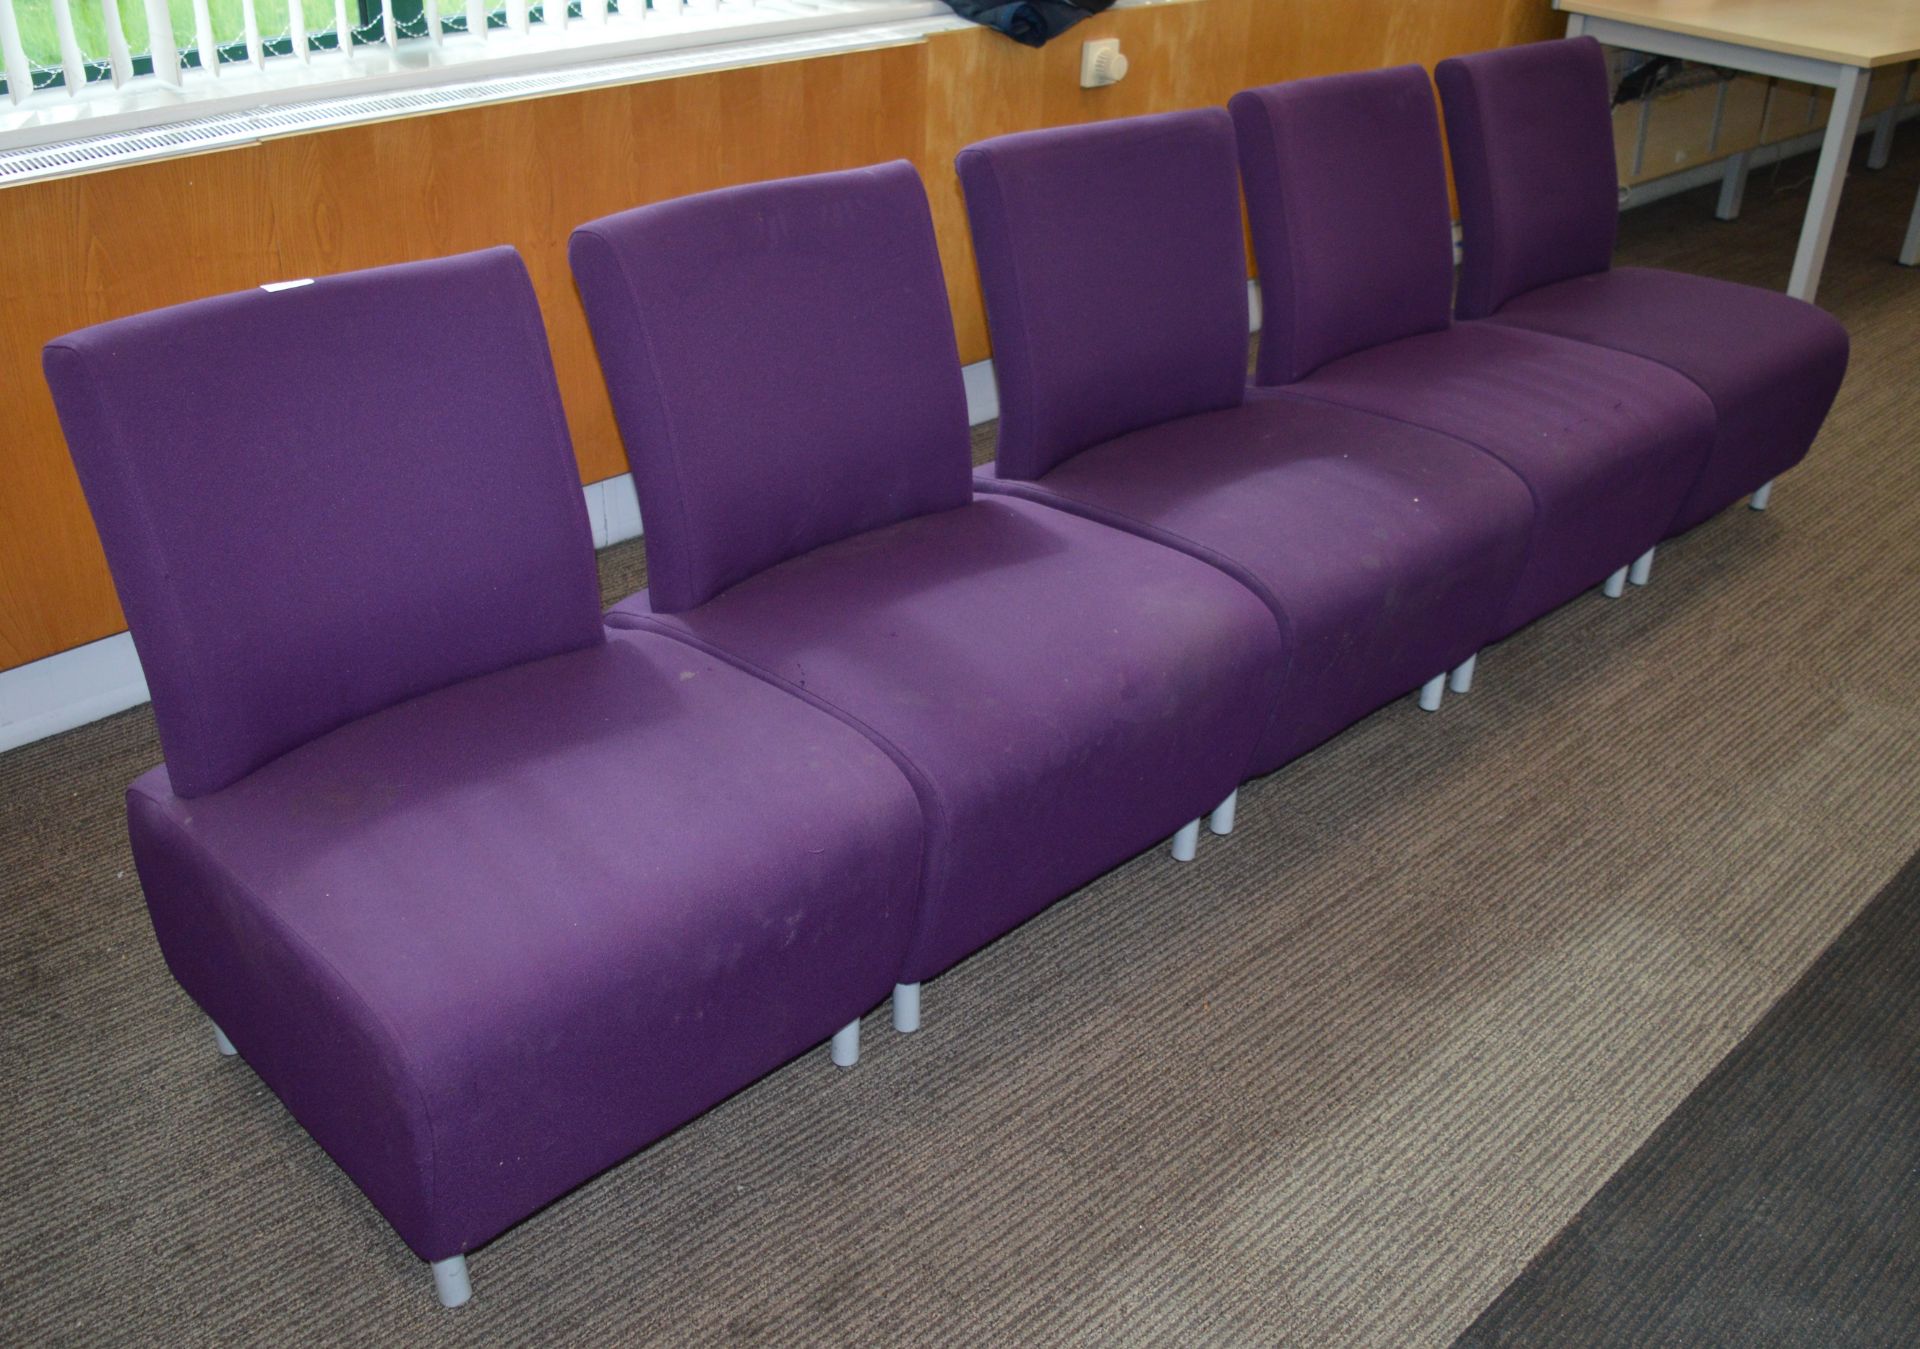 1 x Modular Five Piece Reception Waiting Room Sofa